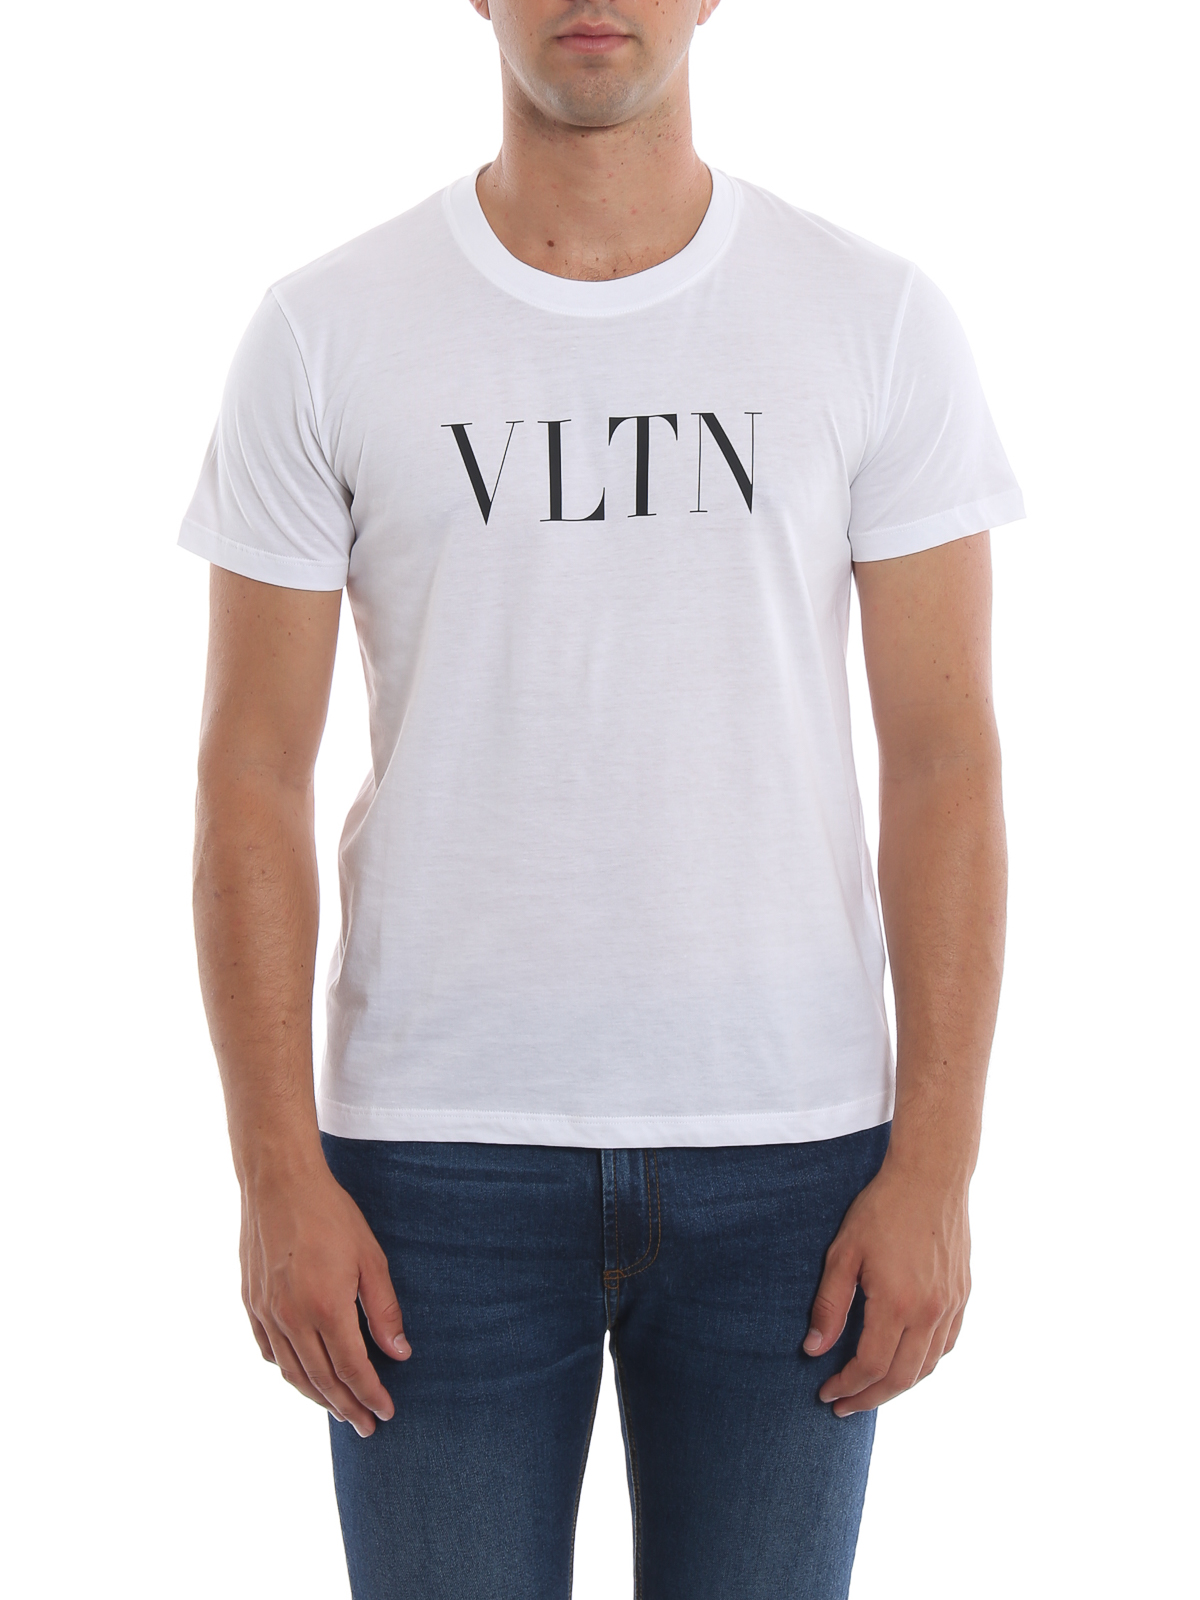 Slumkvarter Meget rart godt umoral T-shirts Valentino - VLTN logo print white T-shirt - RV3MG10V3LEA01